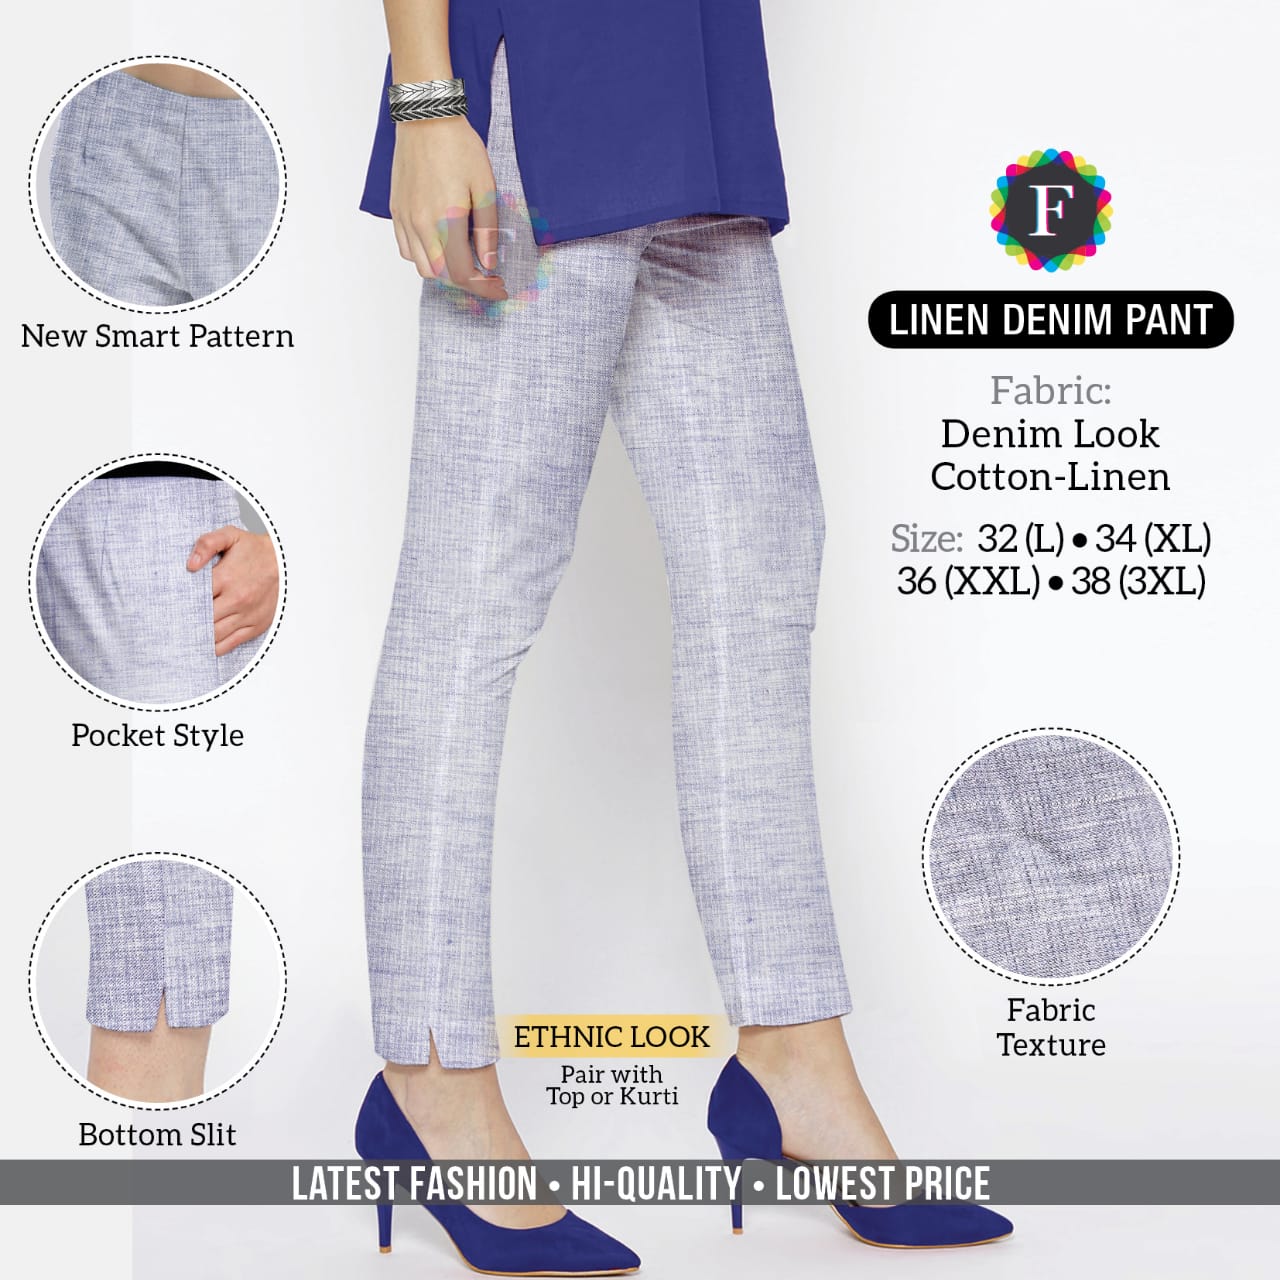 Linen Denim Pant Stylish Bottom Wear For Festive Season